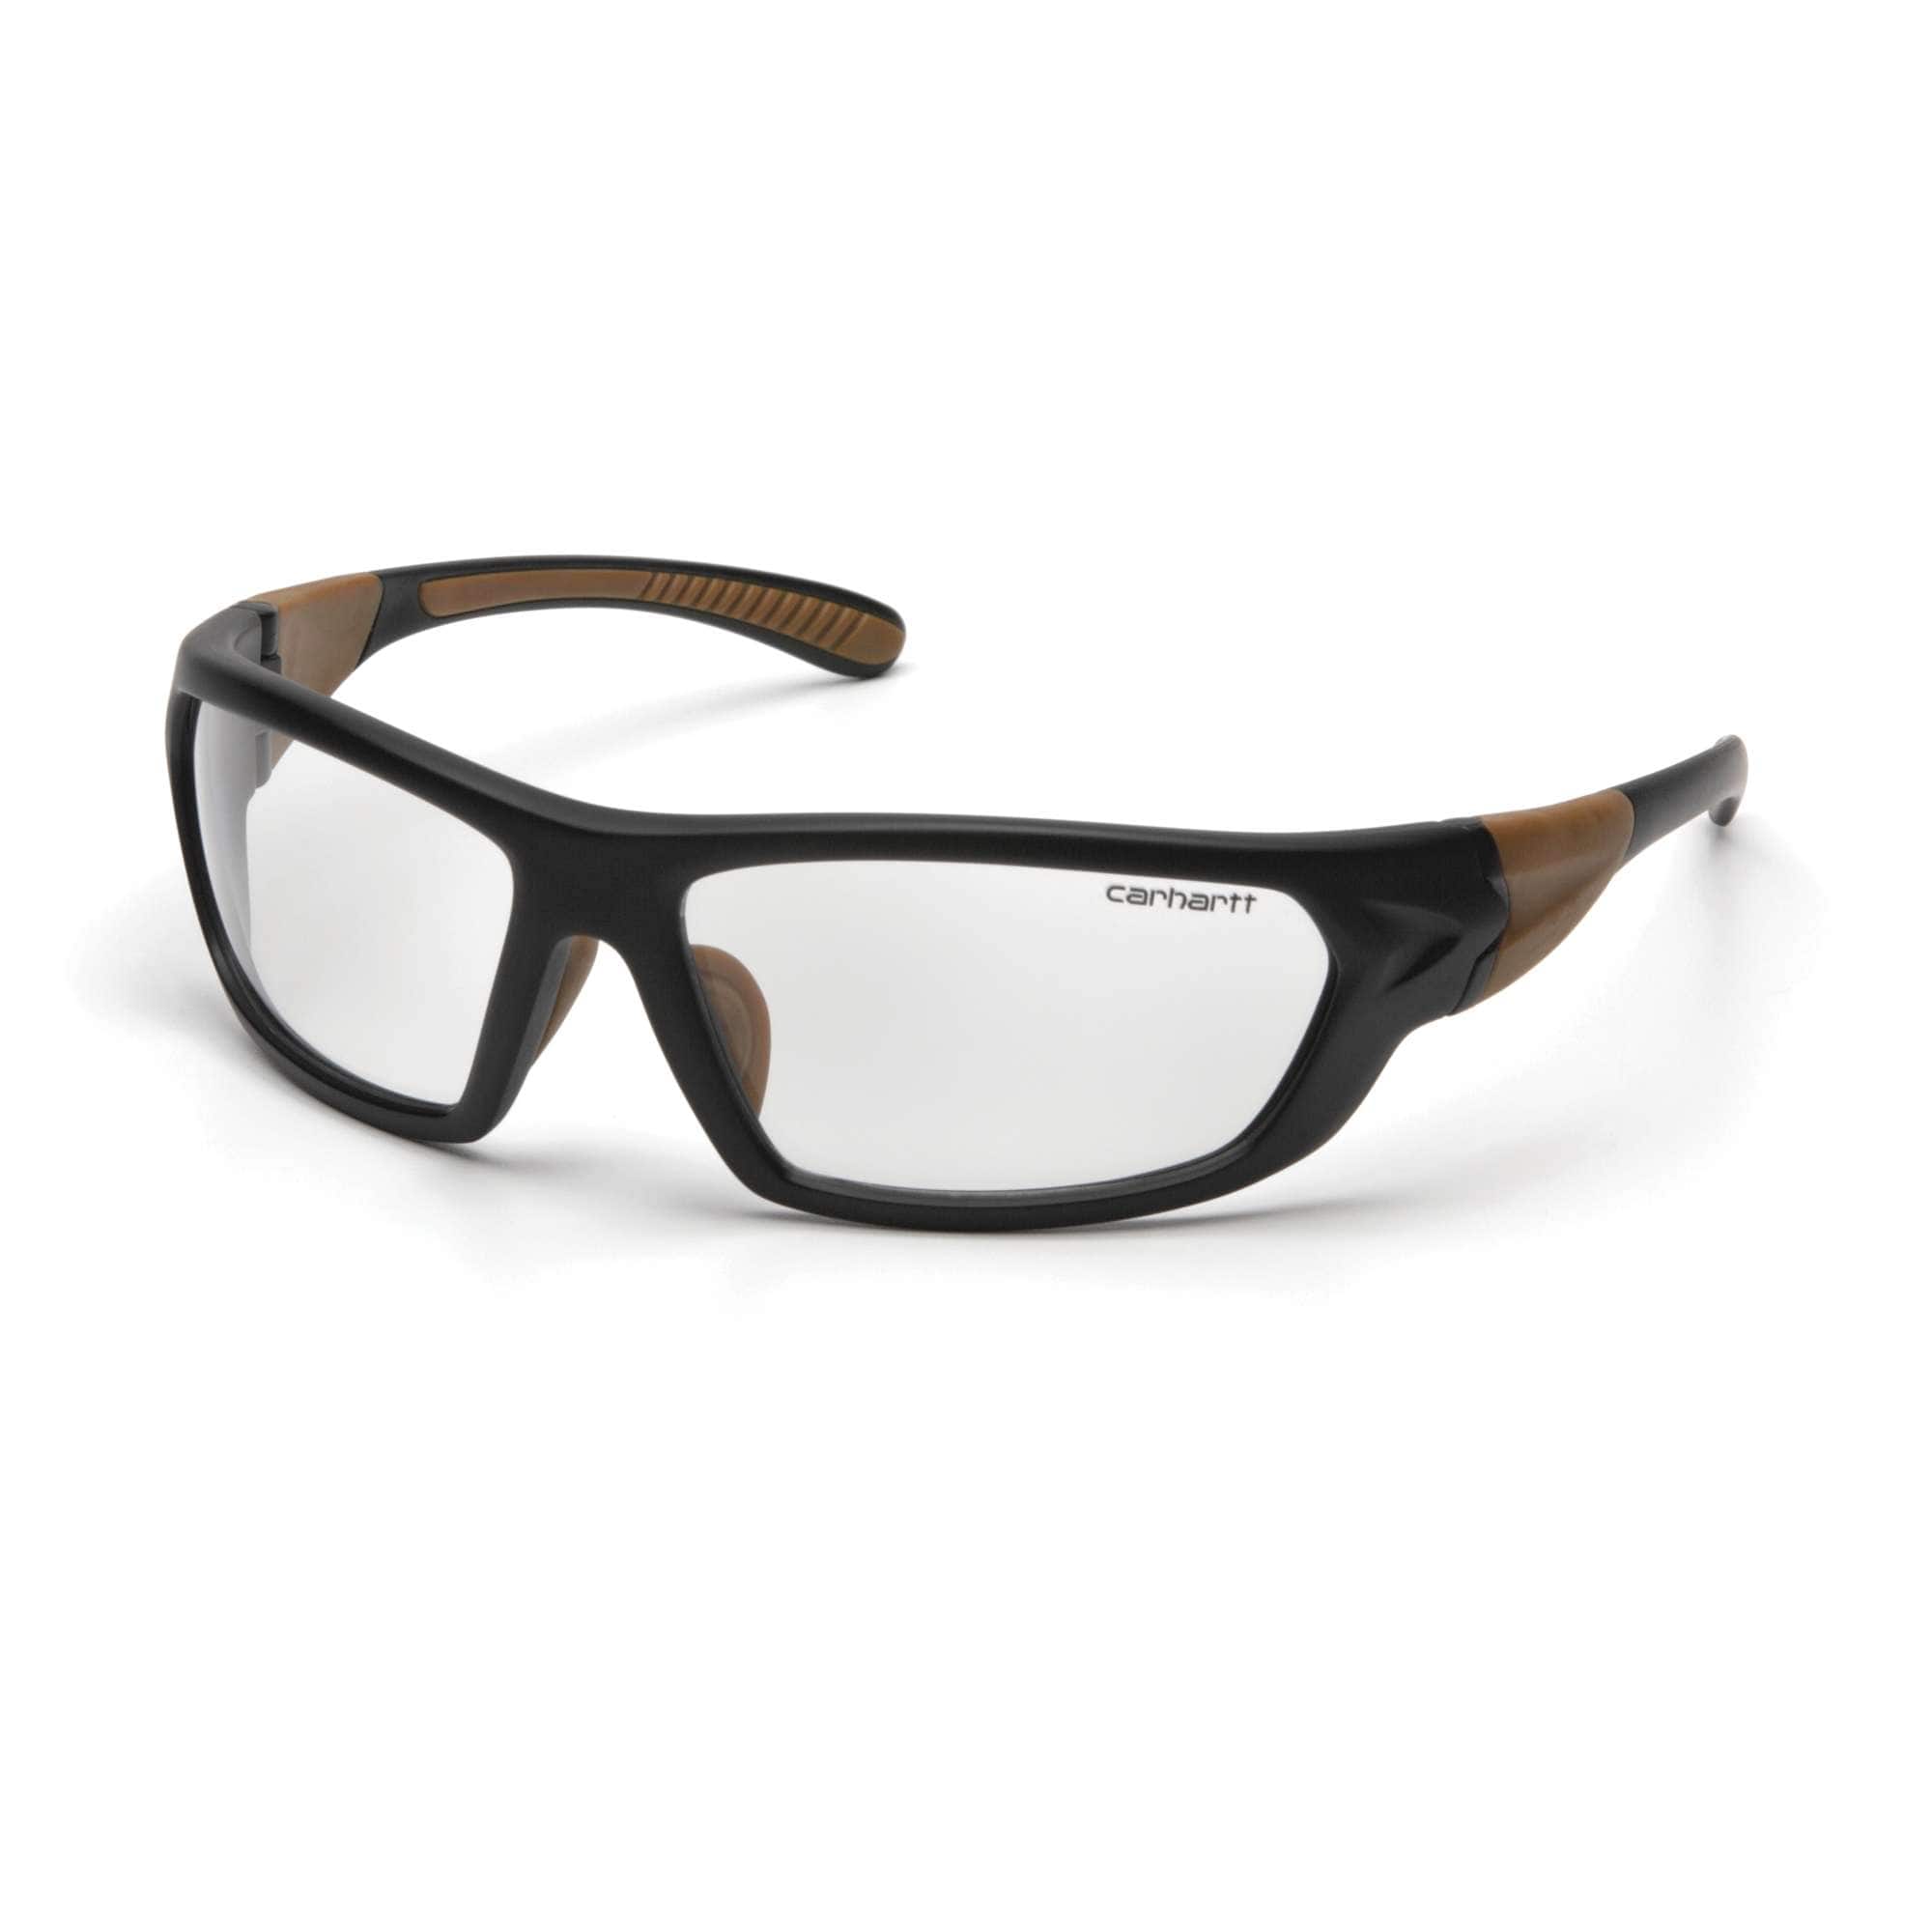 Carbondale Anti-Fog Safety Glasses